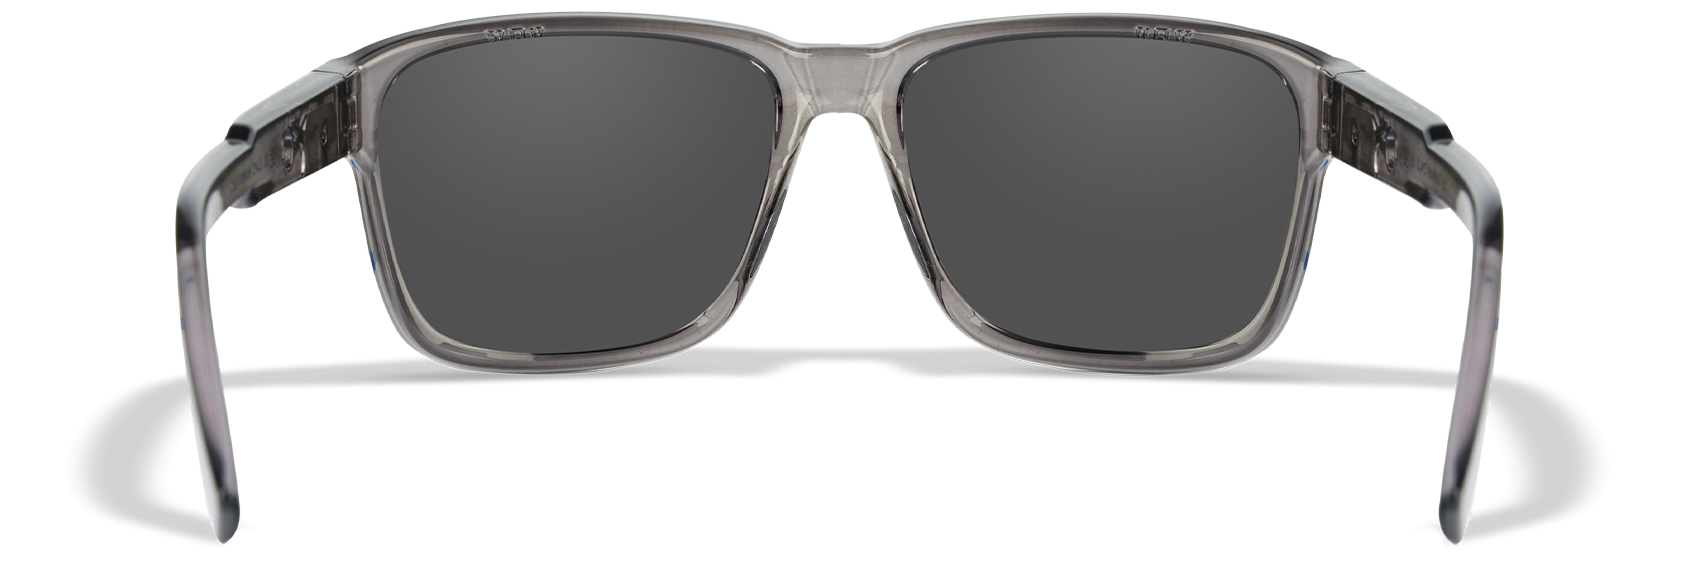 Wiley X Trek Sunglasses, 2 colors